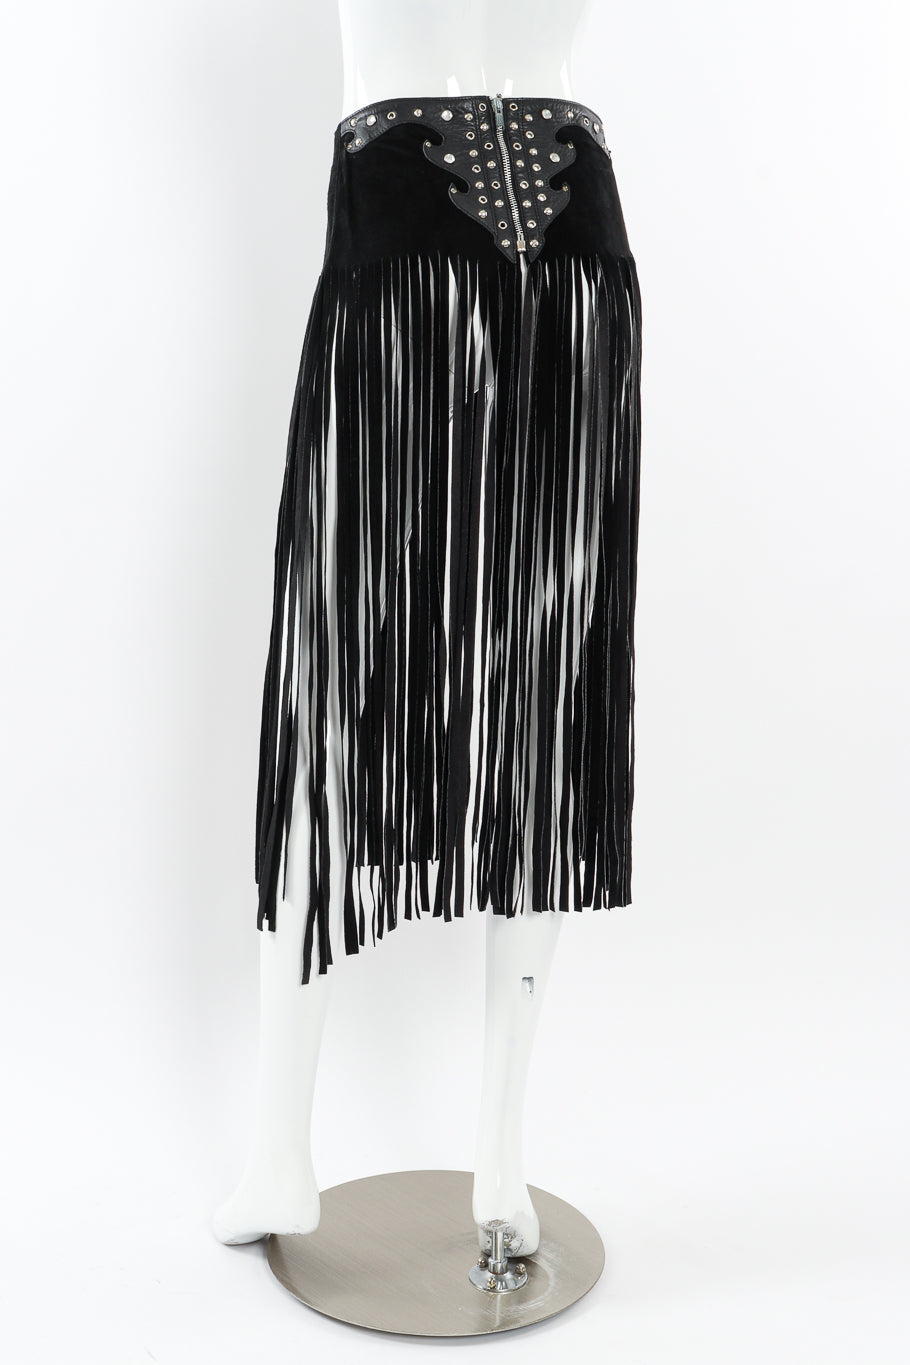 leather fringe belt skirt by Free Art Studio on mannequin back @recessla